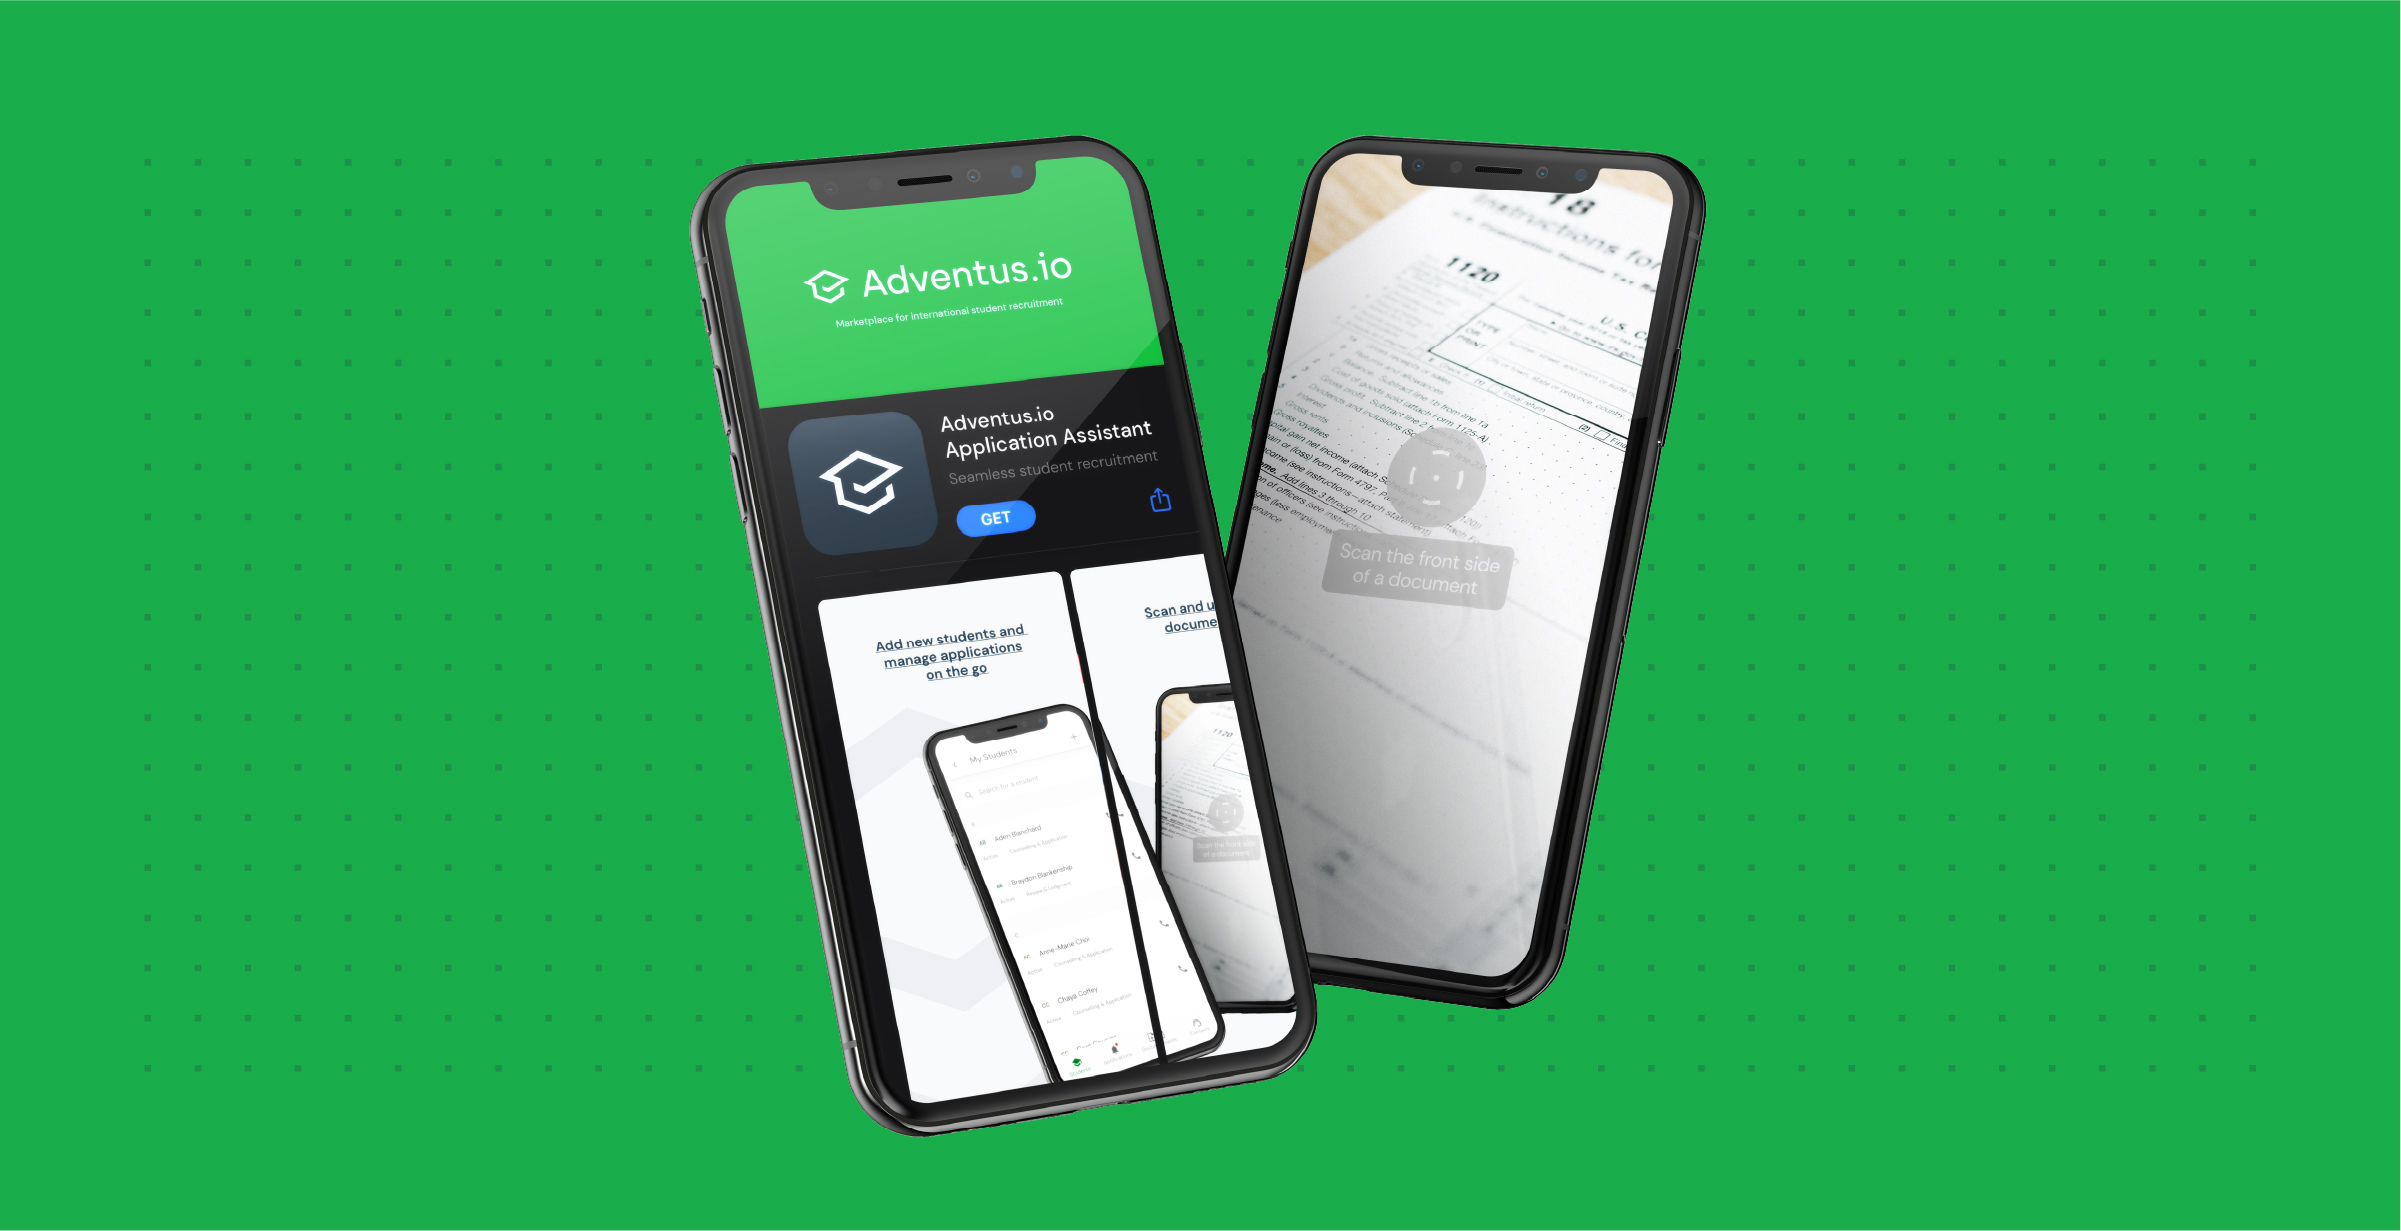 Introducing the Adventus.io mobile app